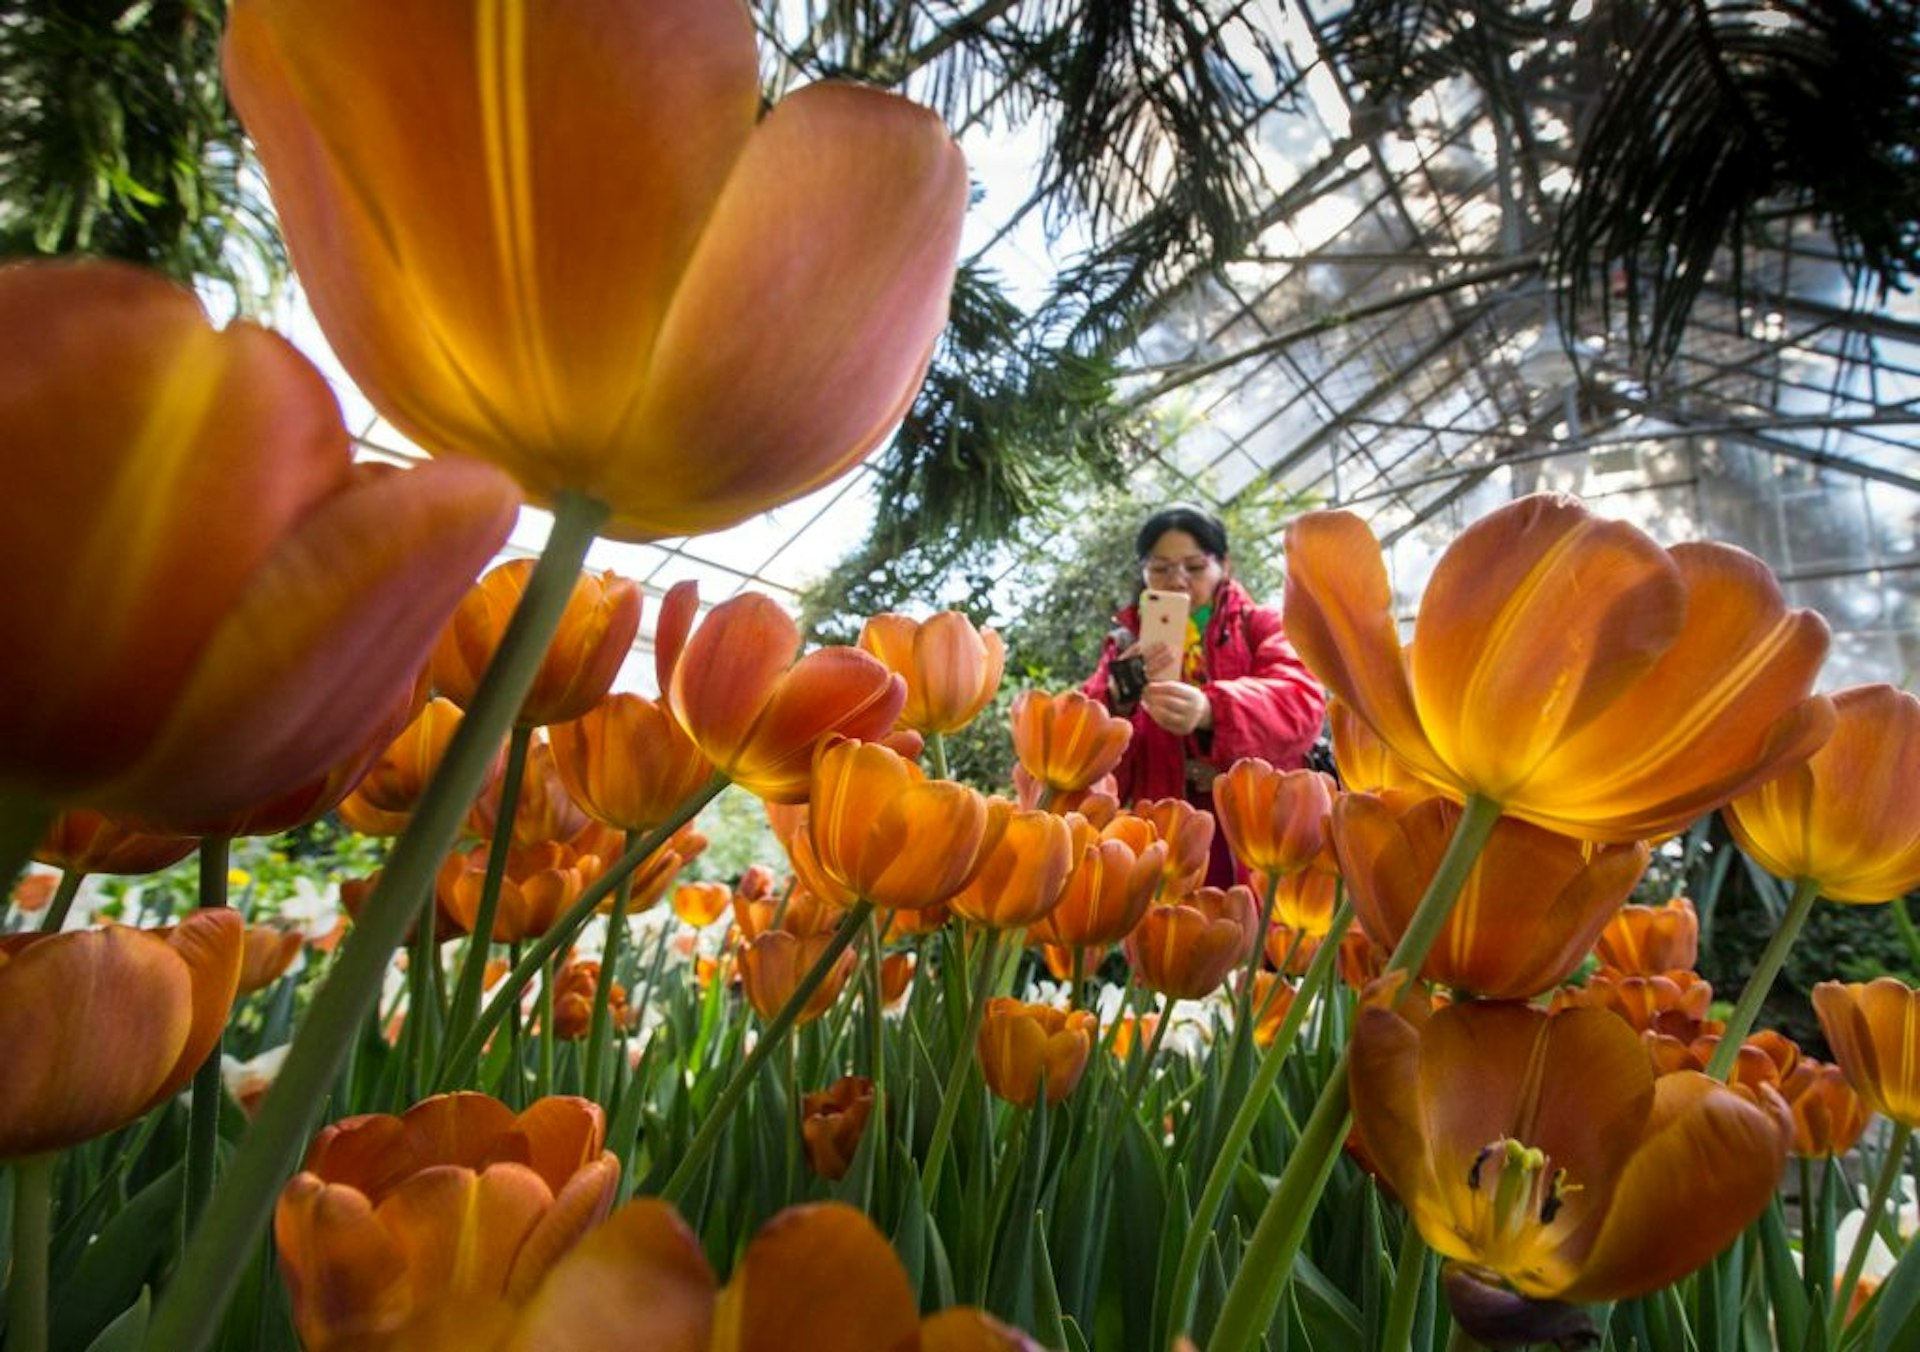 A visitor photographs tulips at Toronto's Allen Gardens